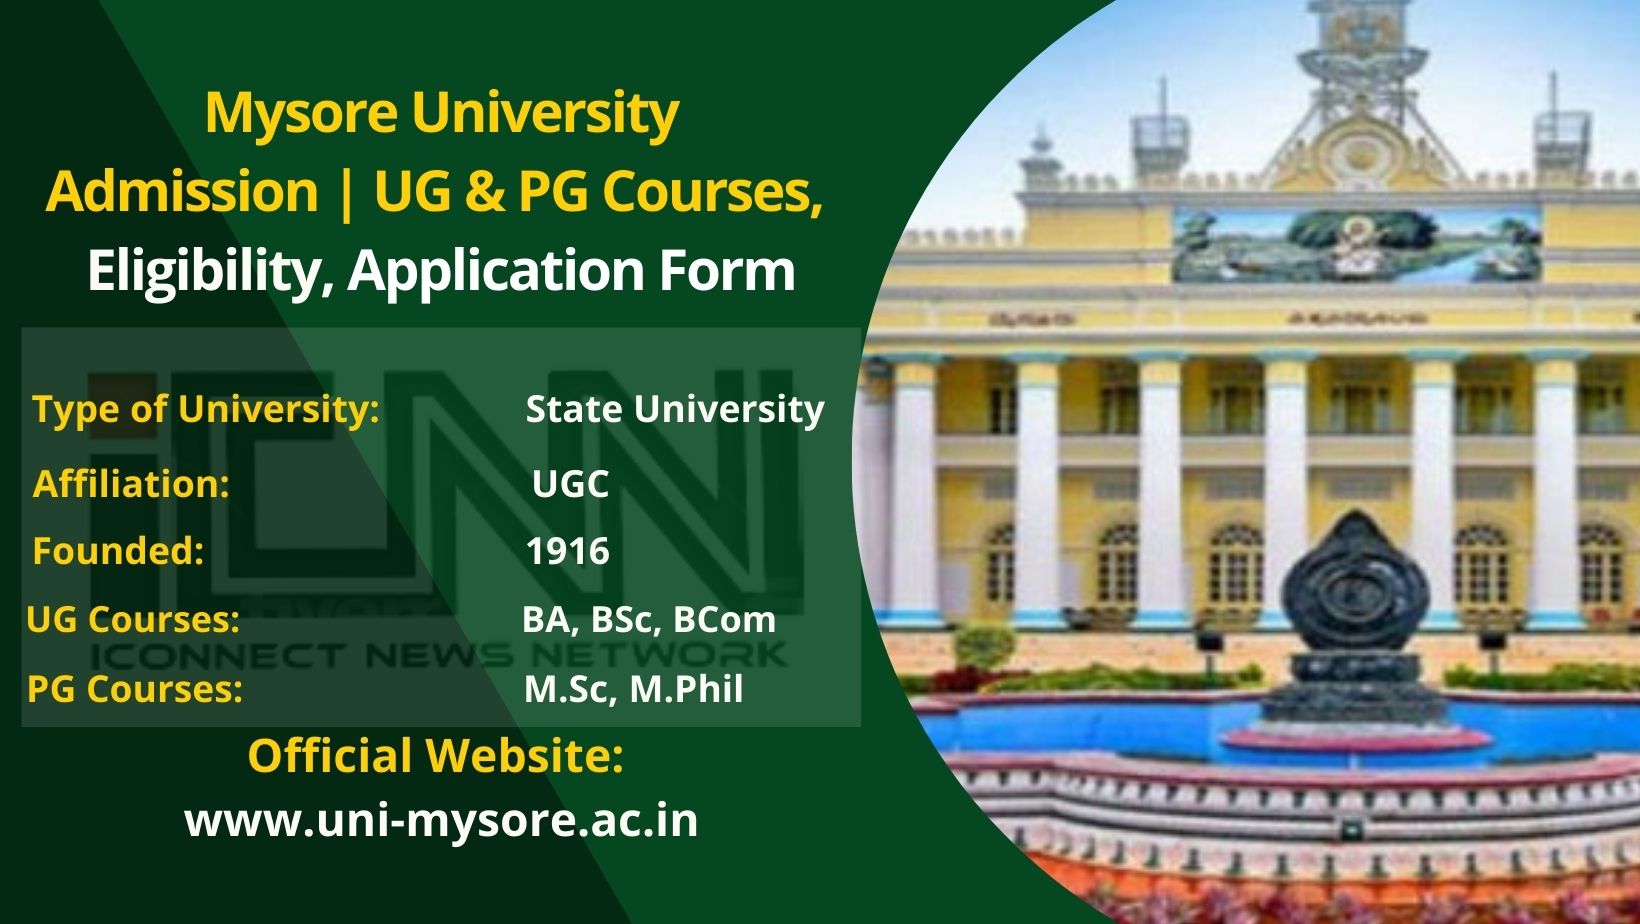 university of mysore phd course work 2022